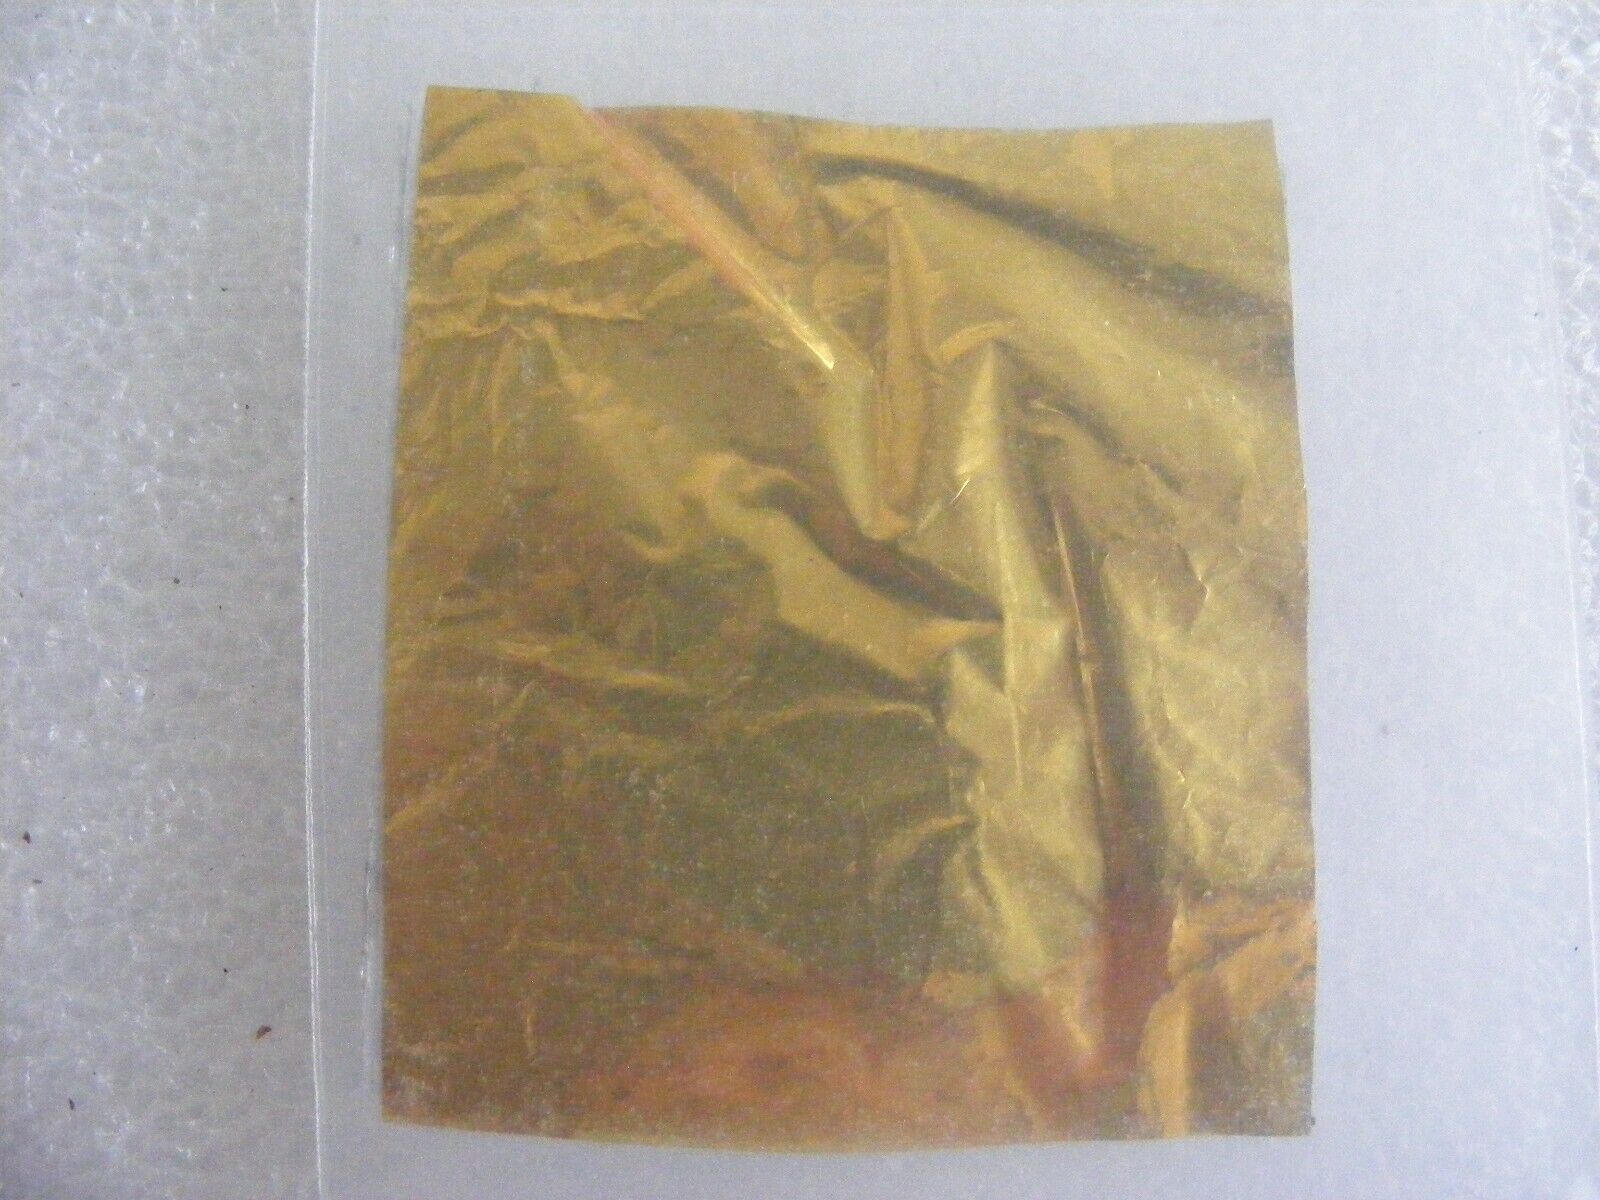 NASA Apollo Lunar Module Flight Hardware Gold Thermal Radiation Shield